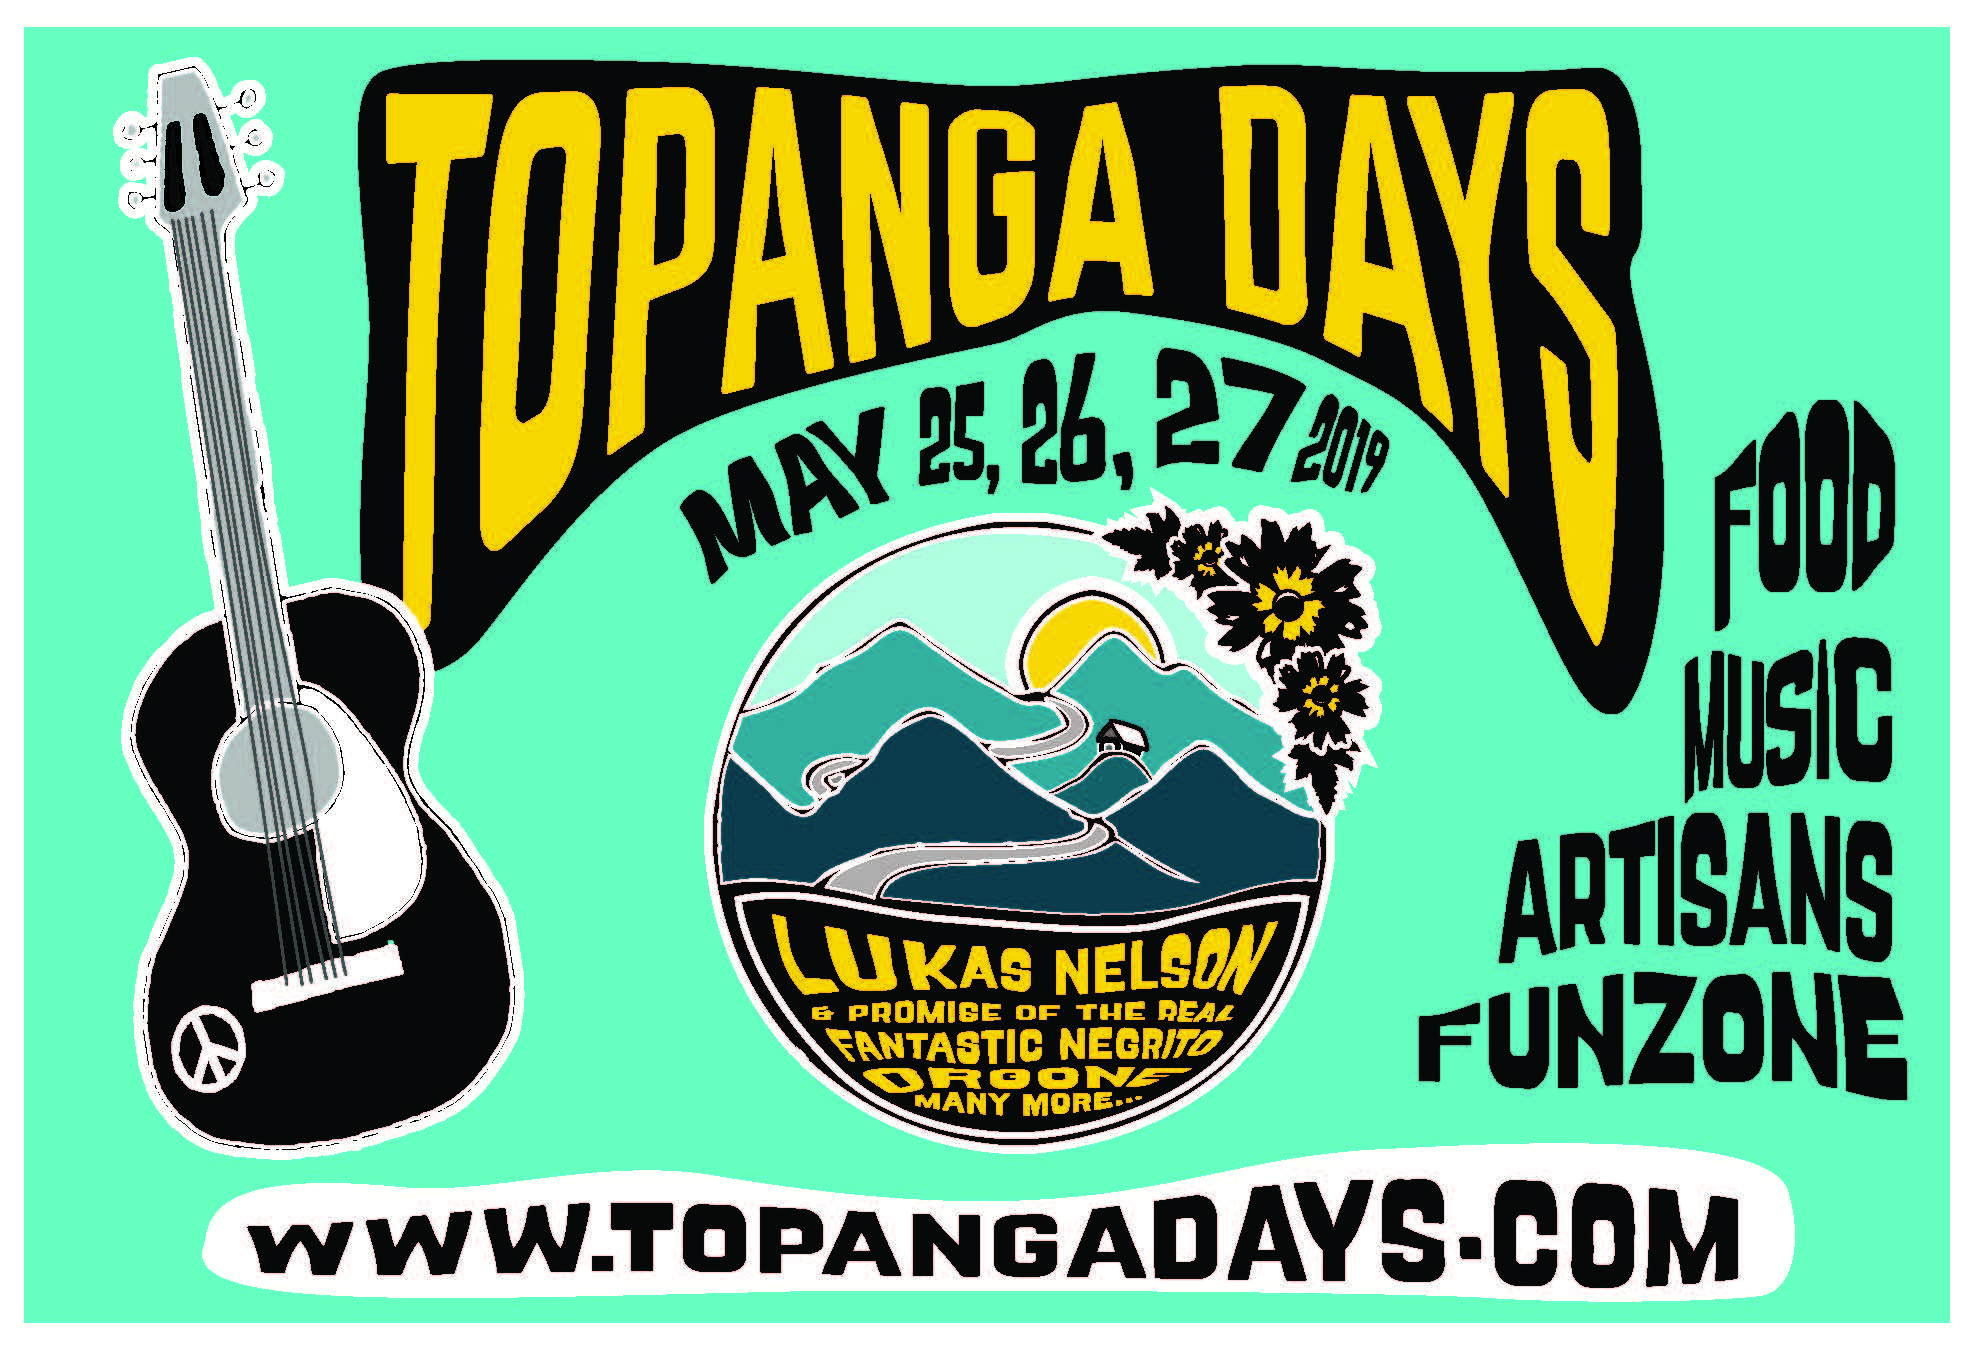 46th Topanga Days Festival & Parade, May 25, 26, 27